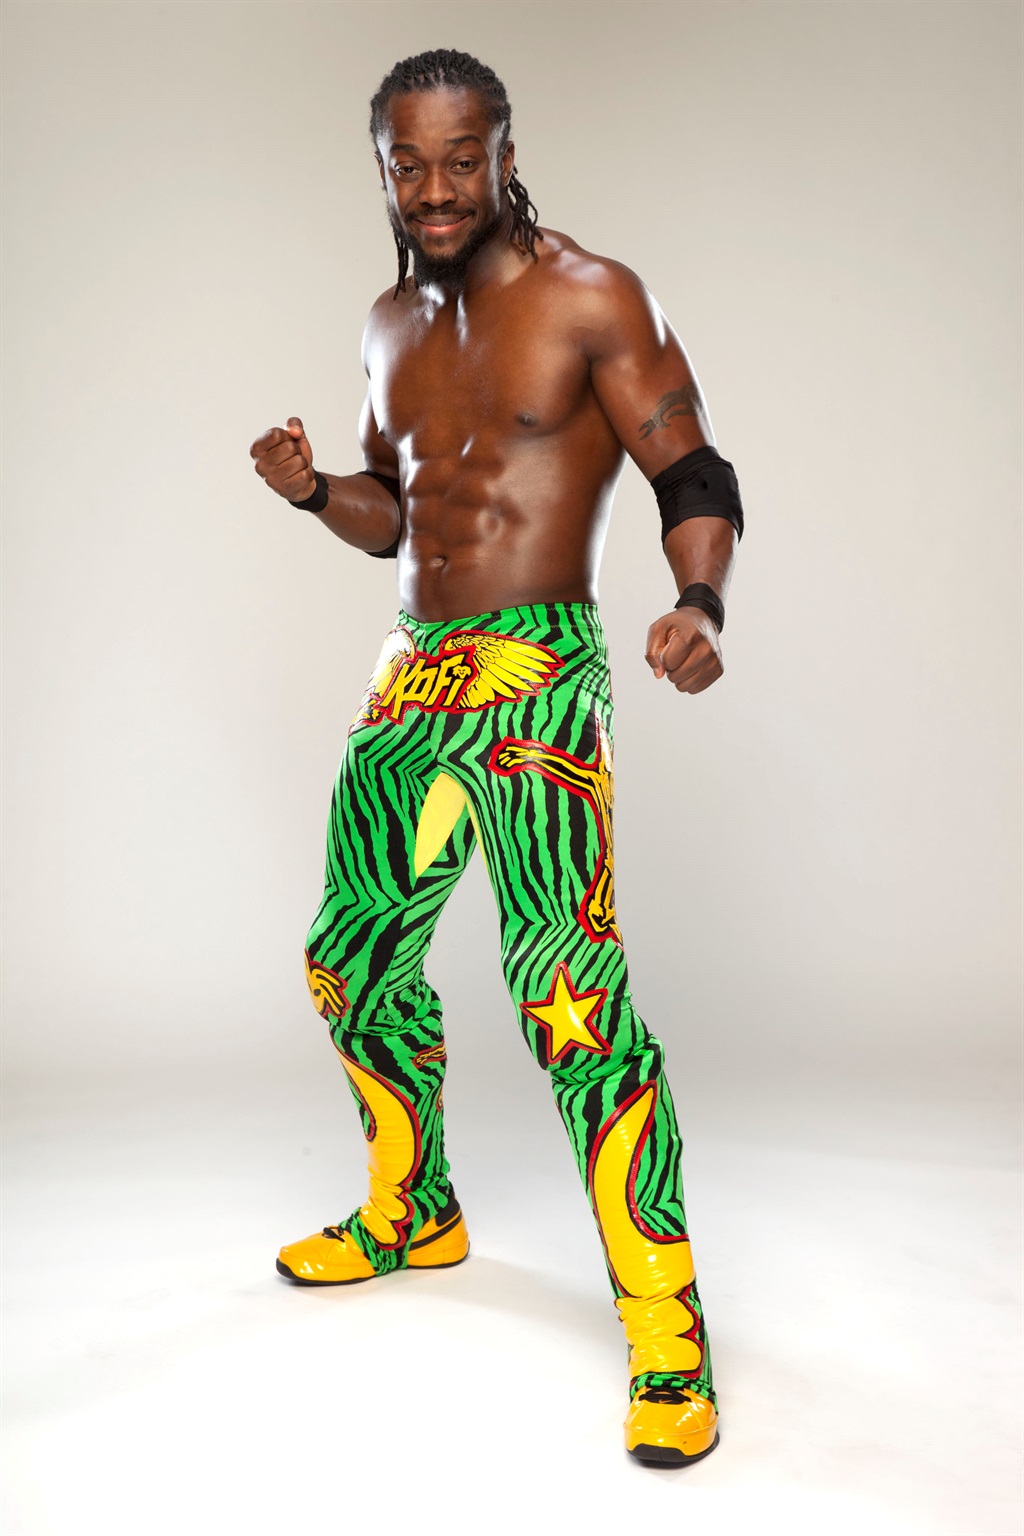  Ghanain wrestler Kofi Kingston PHOTO: SUPPLIED